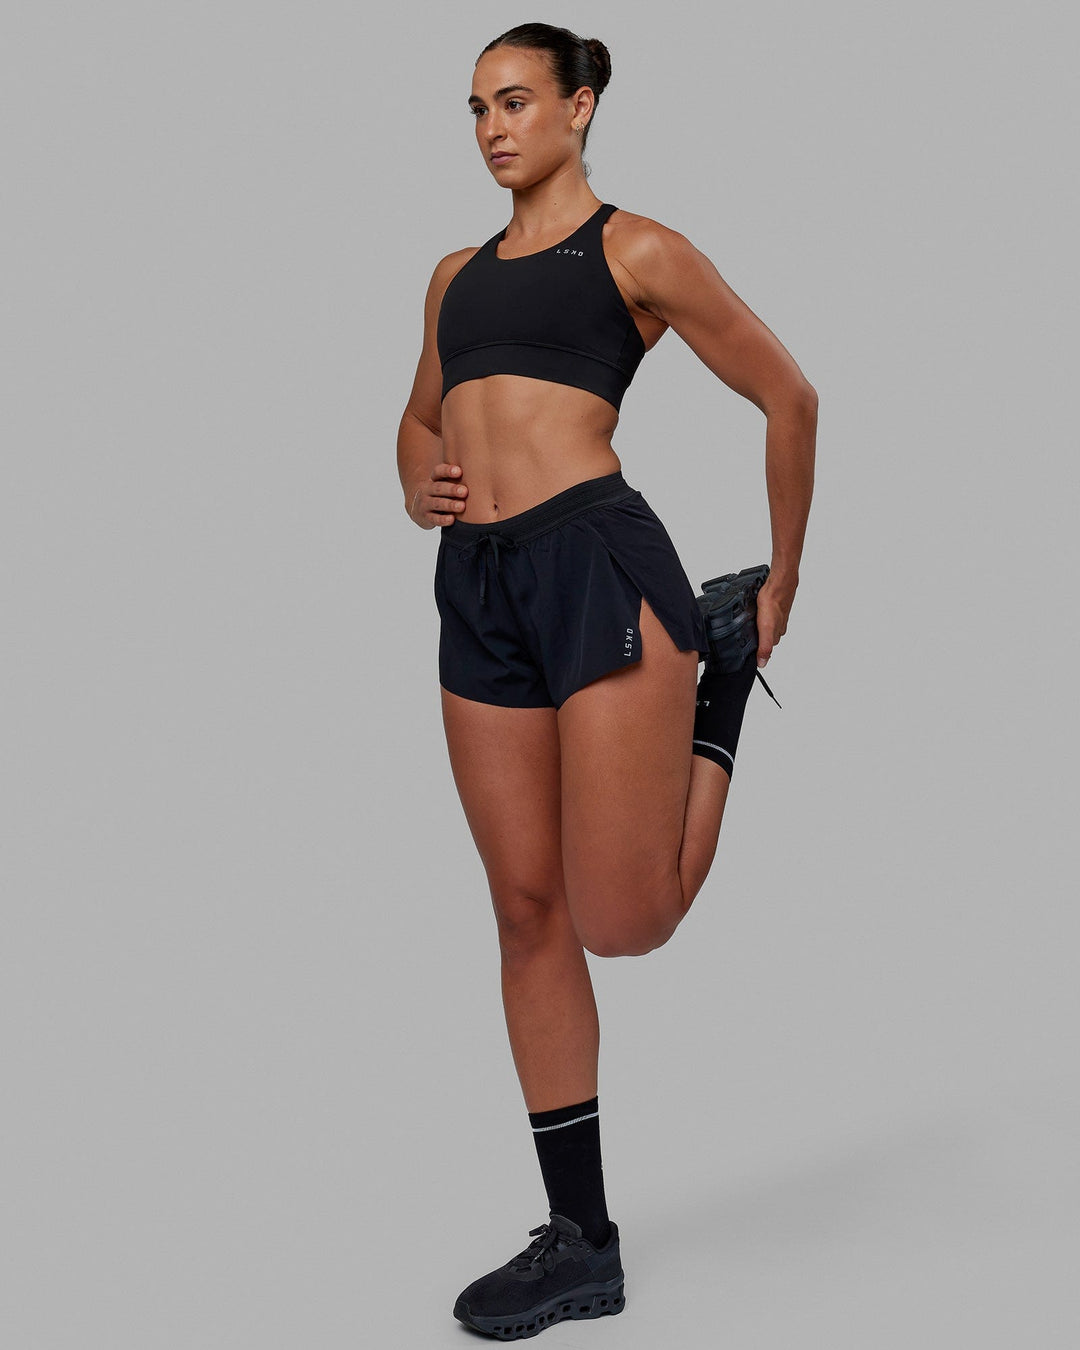 Woman wearing Accelerate Sports Bra - Black